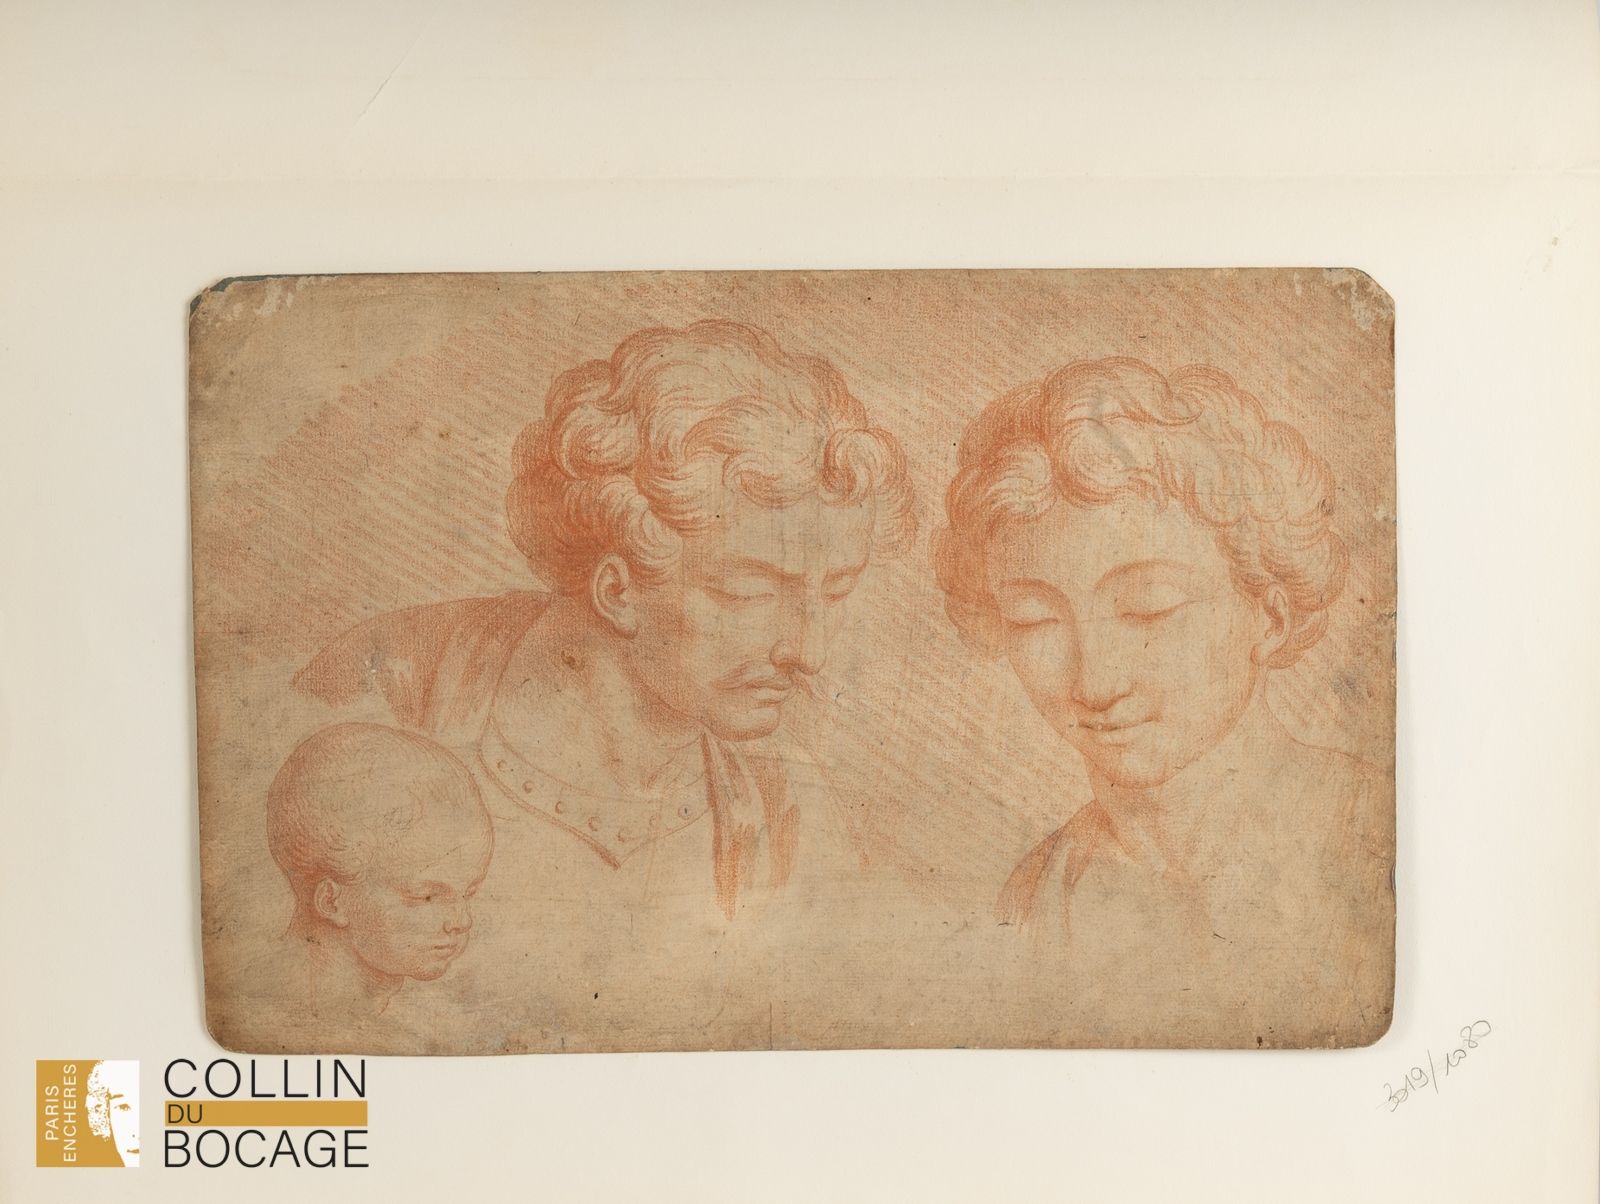 Null 头像研究
三个头像：留小胡子的男人、女人和婴儿
粘贴在纸上的三色纸
36.5 x 24 厘米